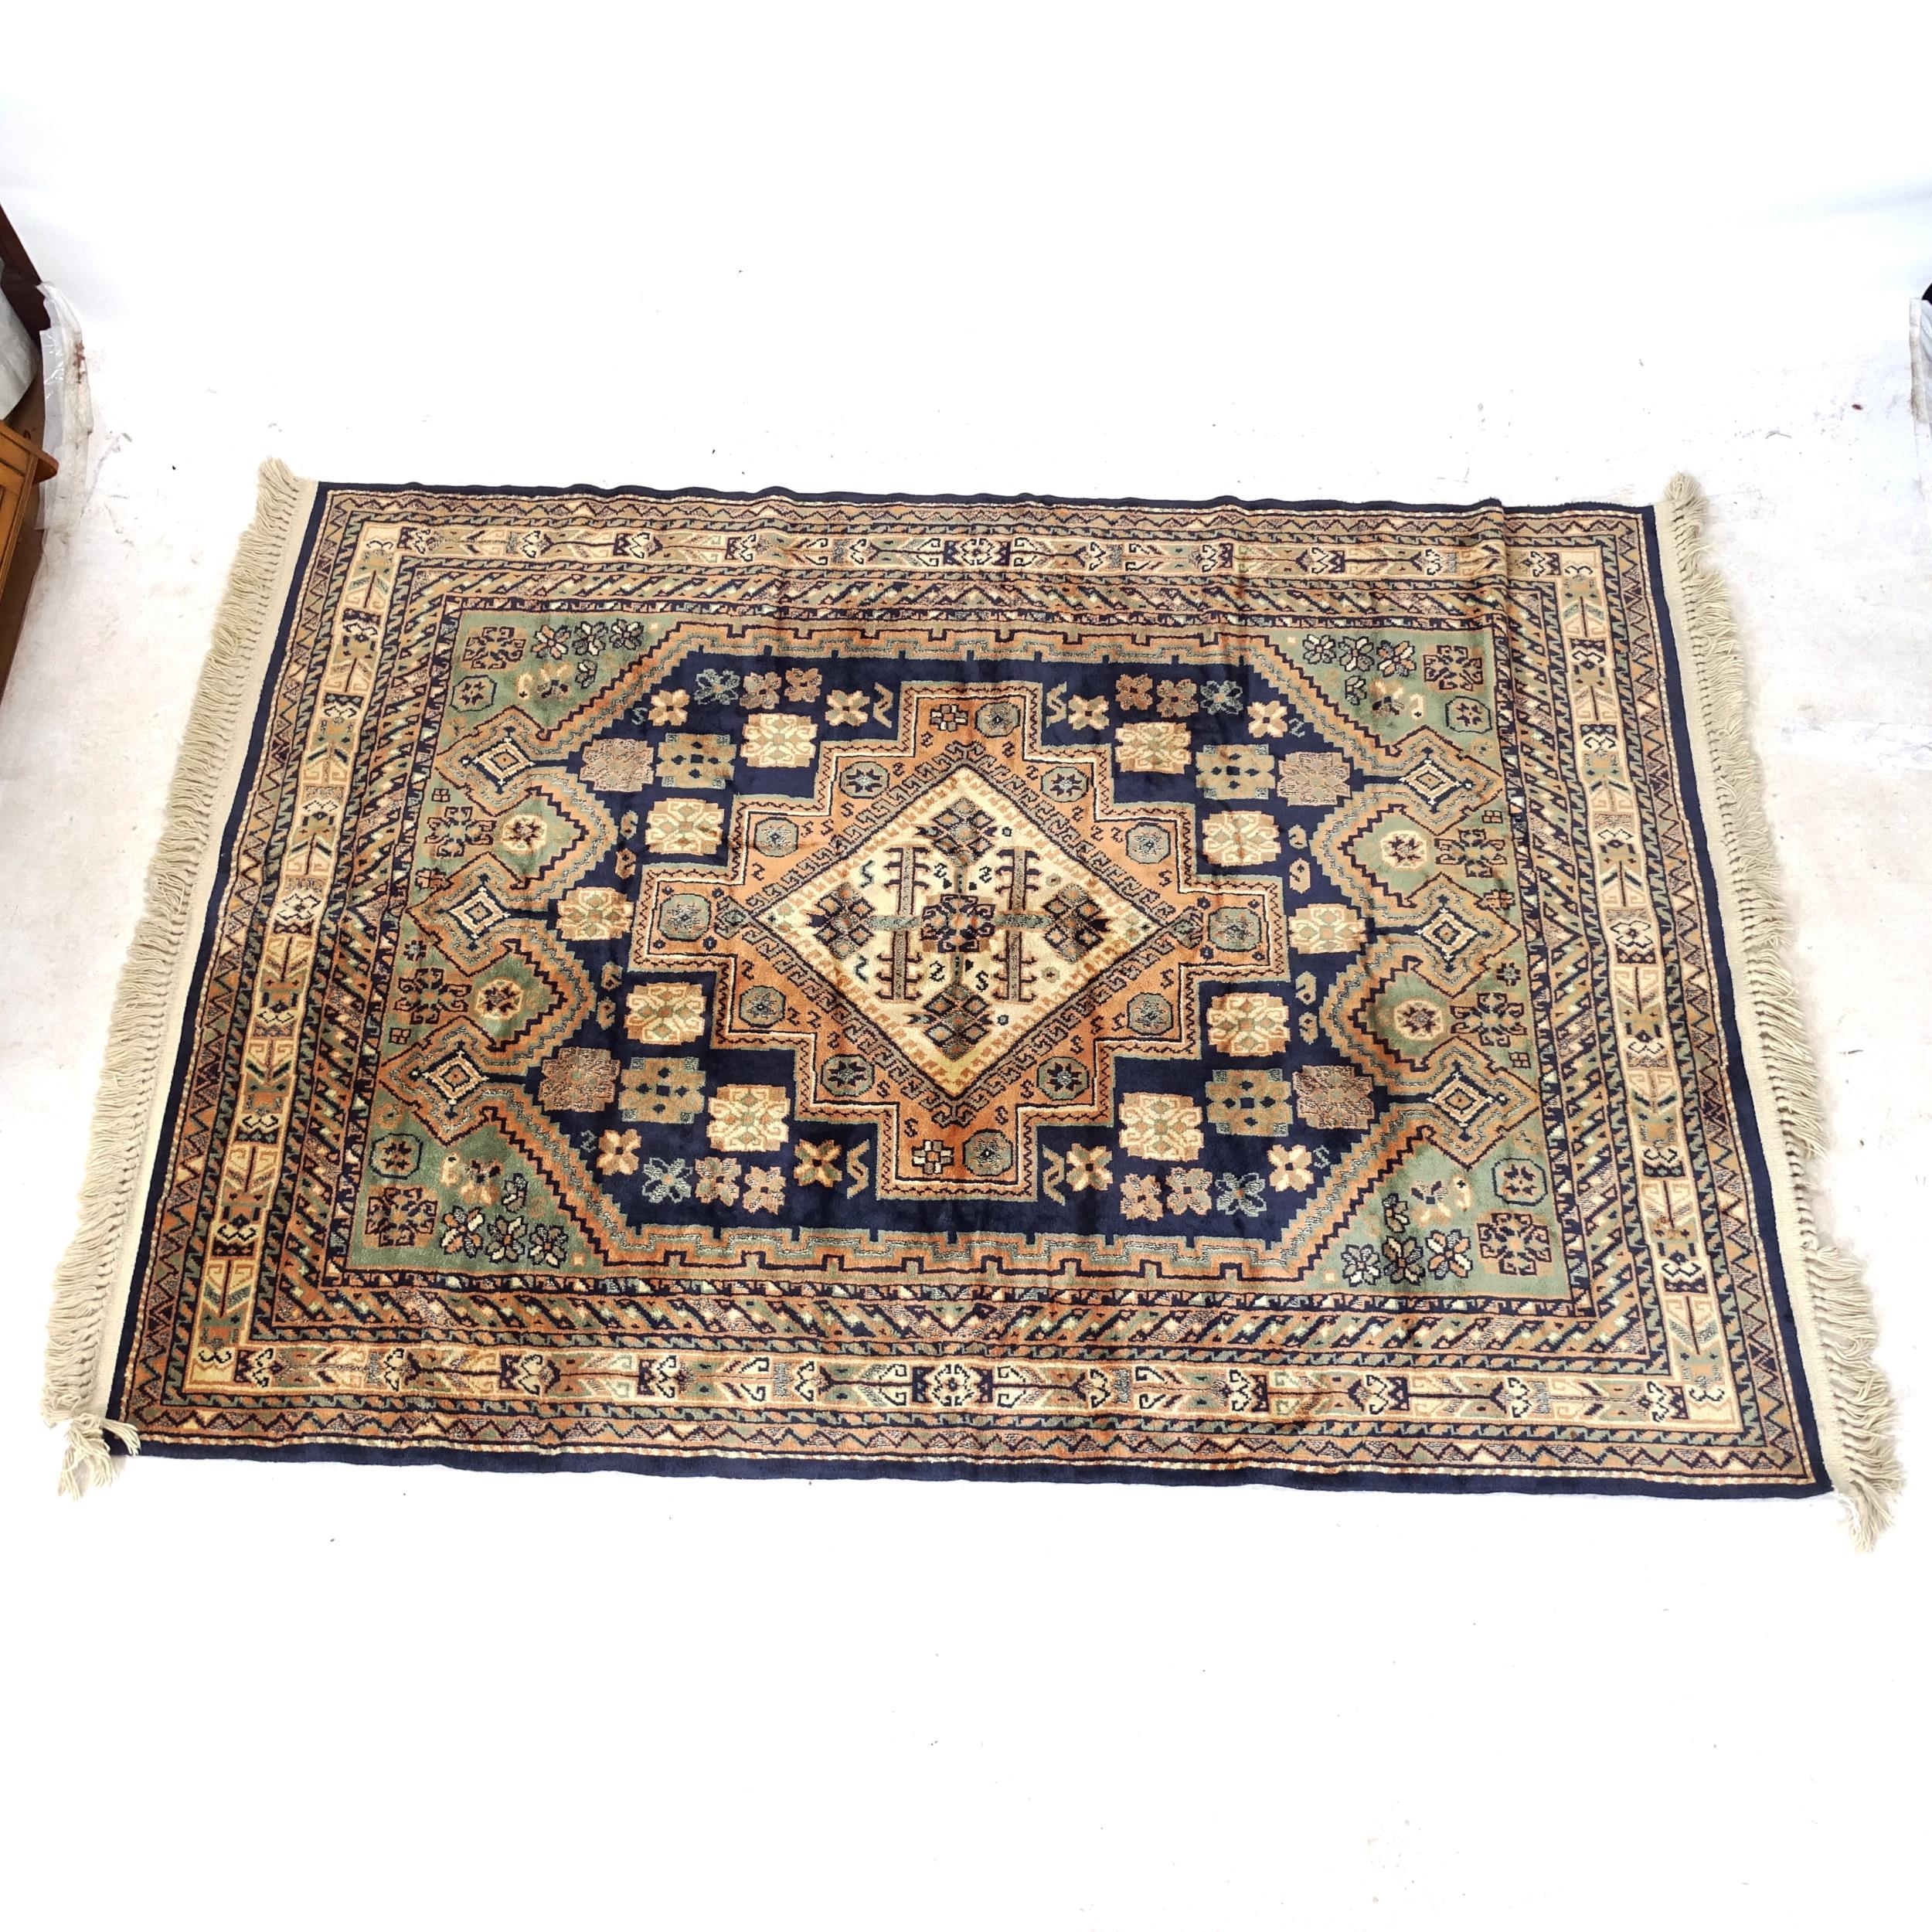 A cream ground silk Persian design rug, 200cm x 140cm